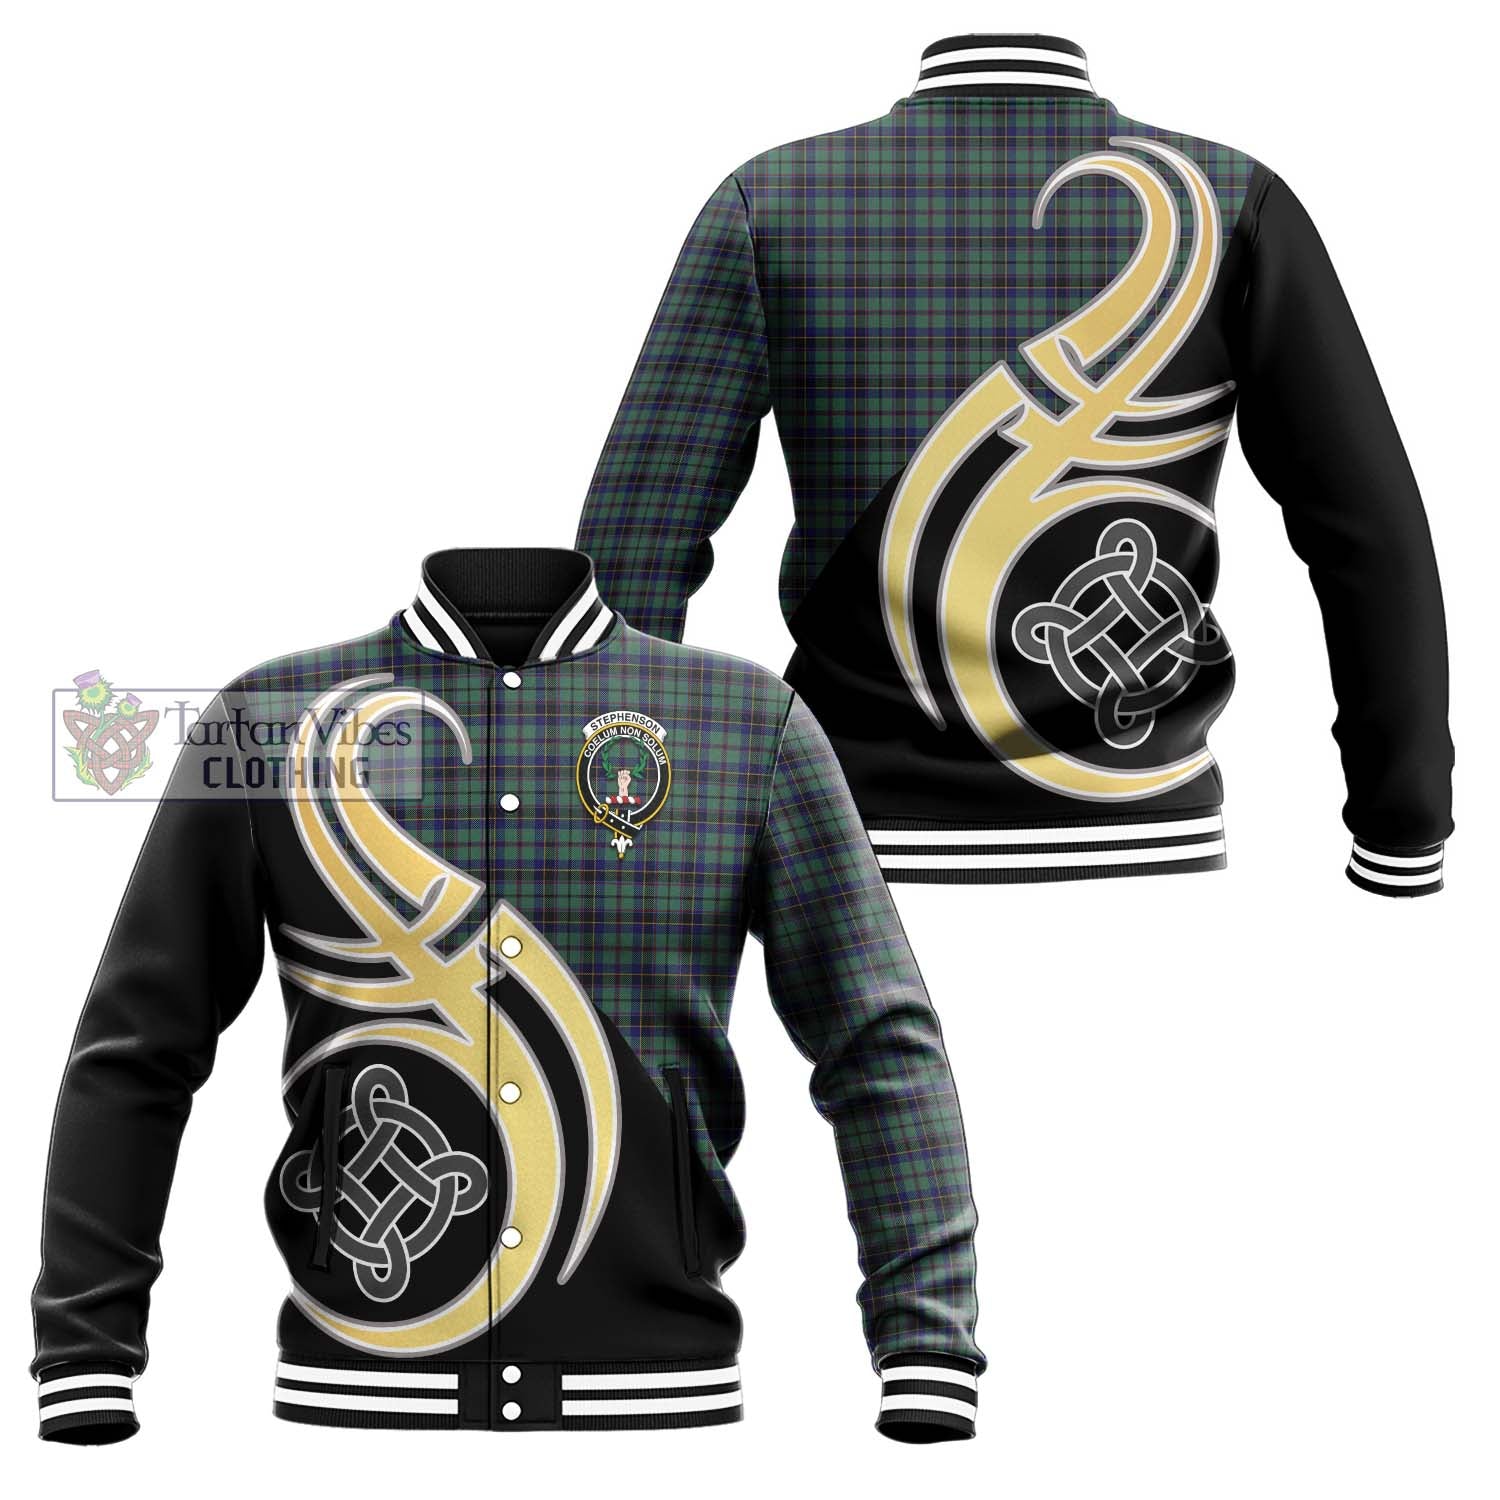 Tartan Vibes Clothing Stephenson Tartan Baseball Jacket with Family Crest and Celtic Symbol Style